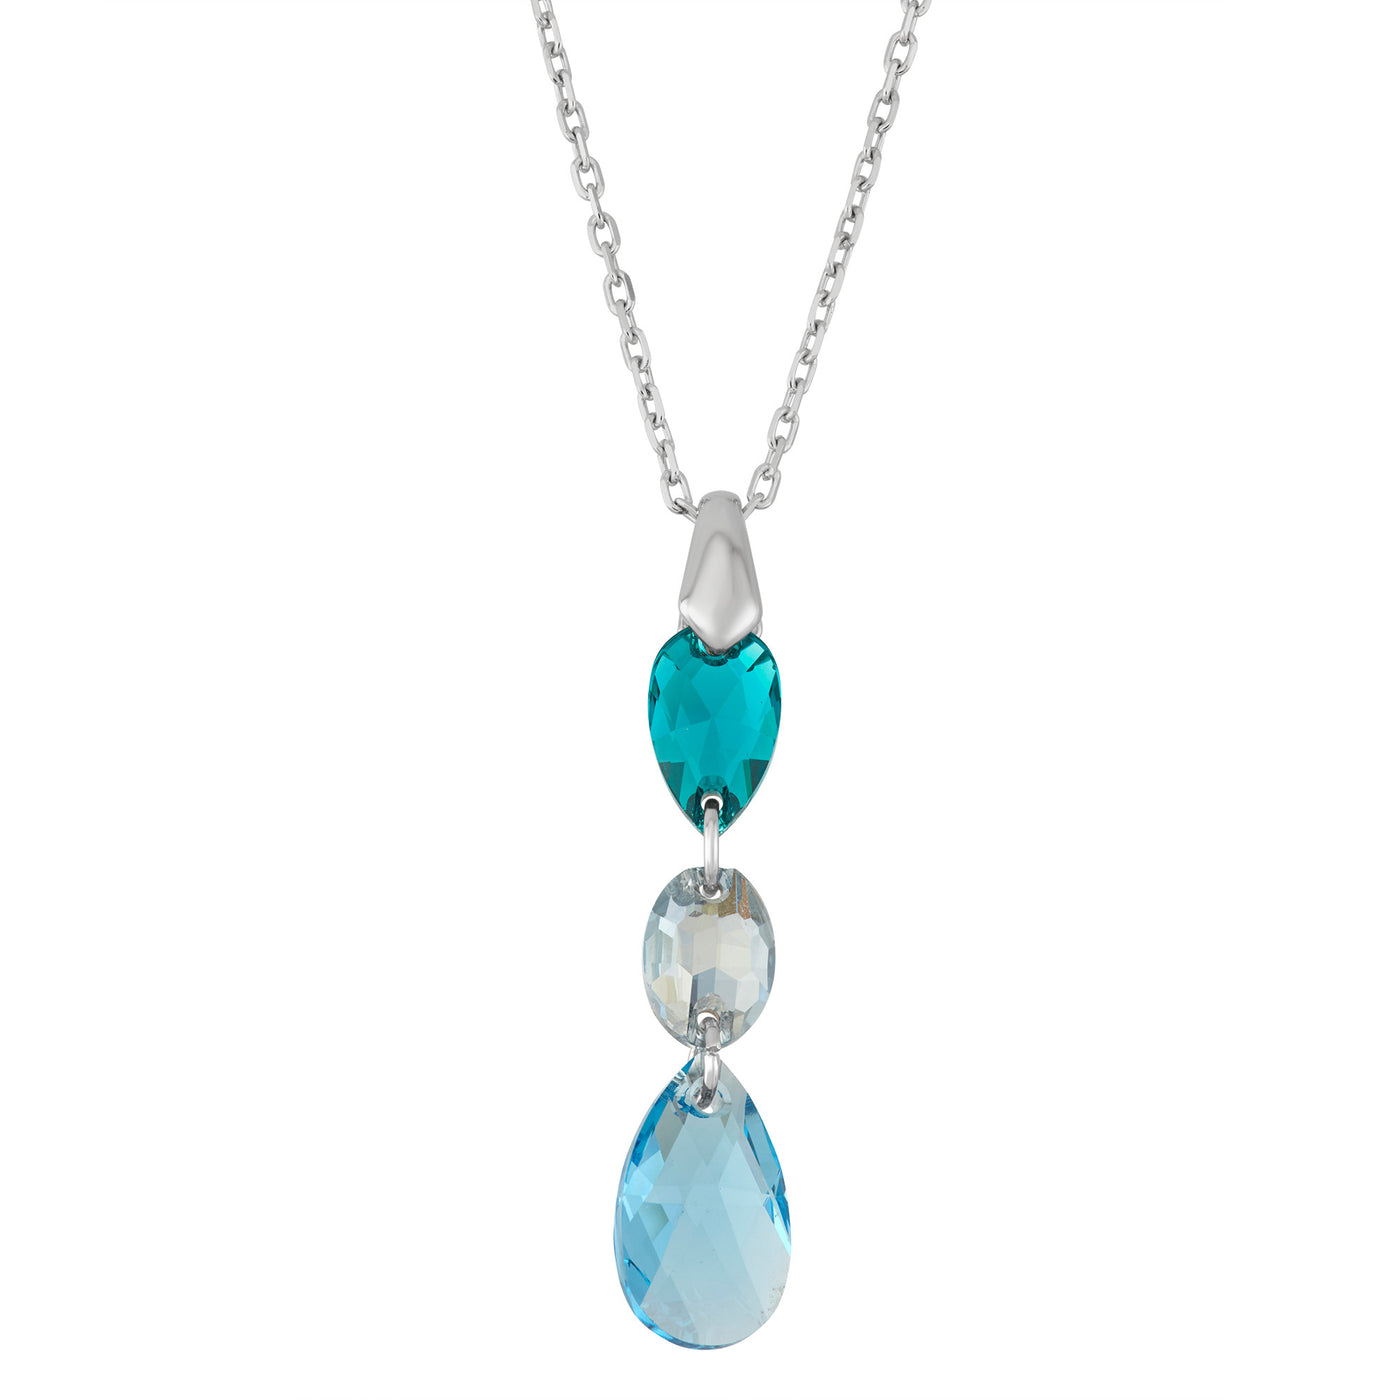 Rebecca Sloane Silver Tear Drop Oval Pendant With Aqua Crystal